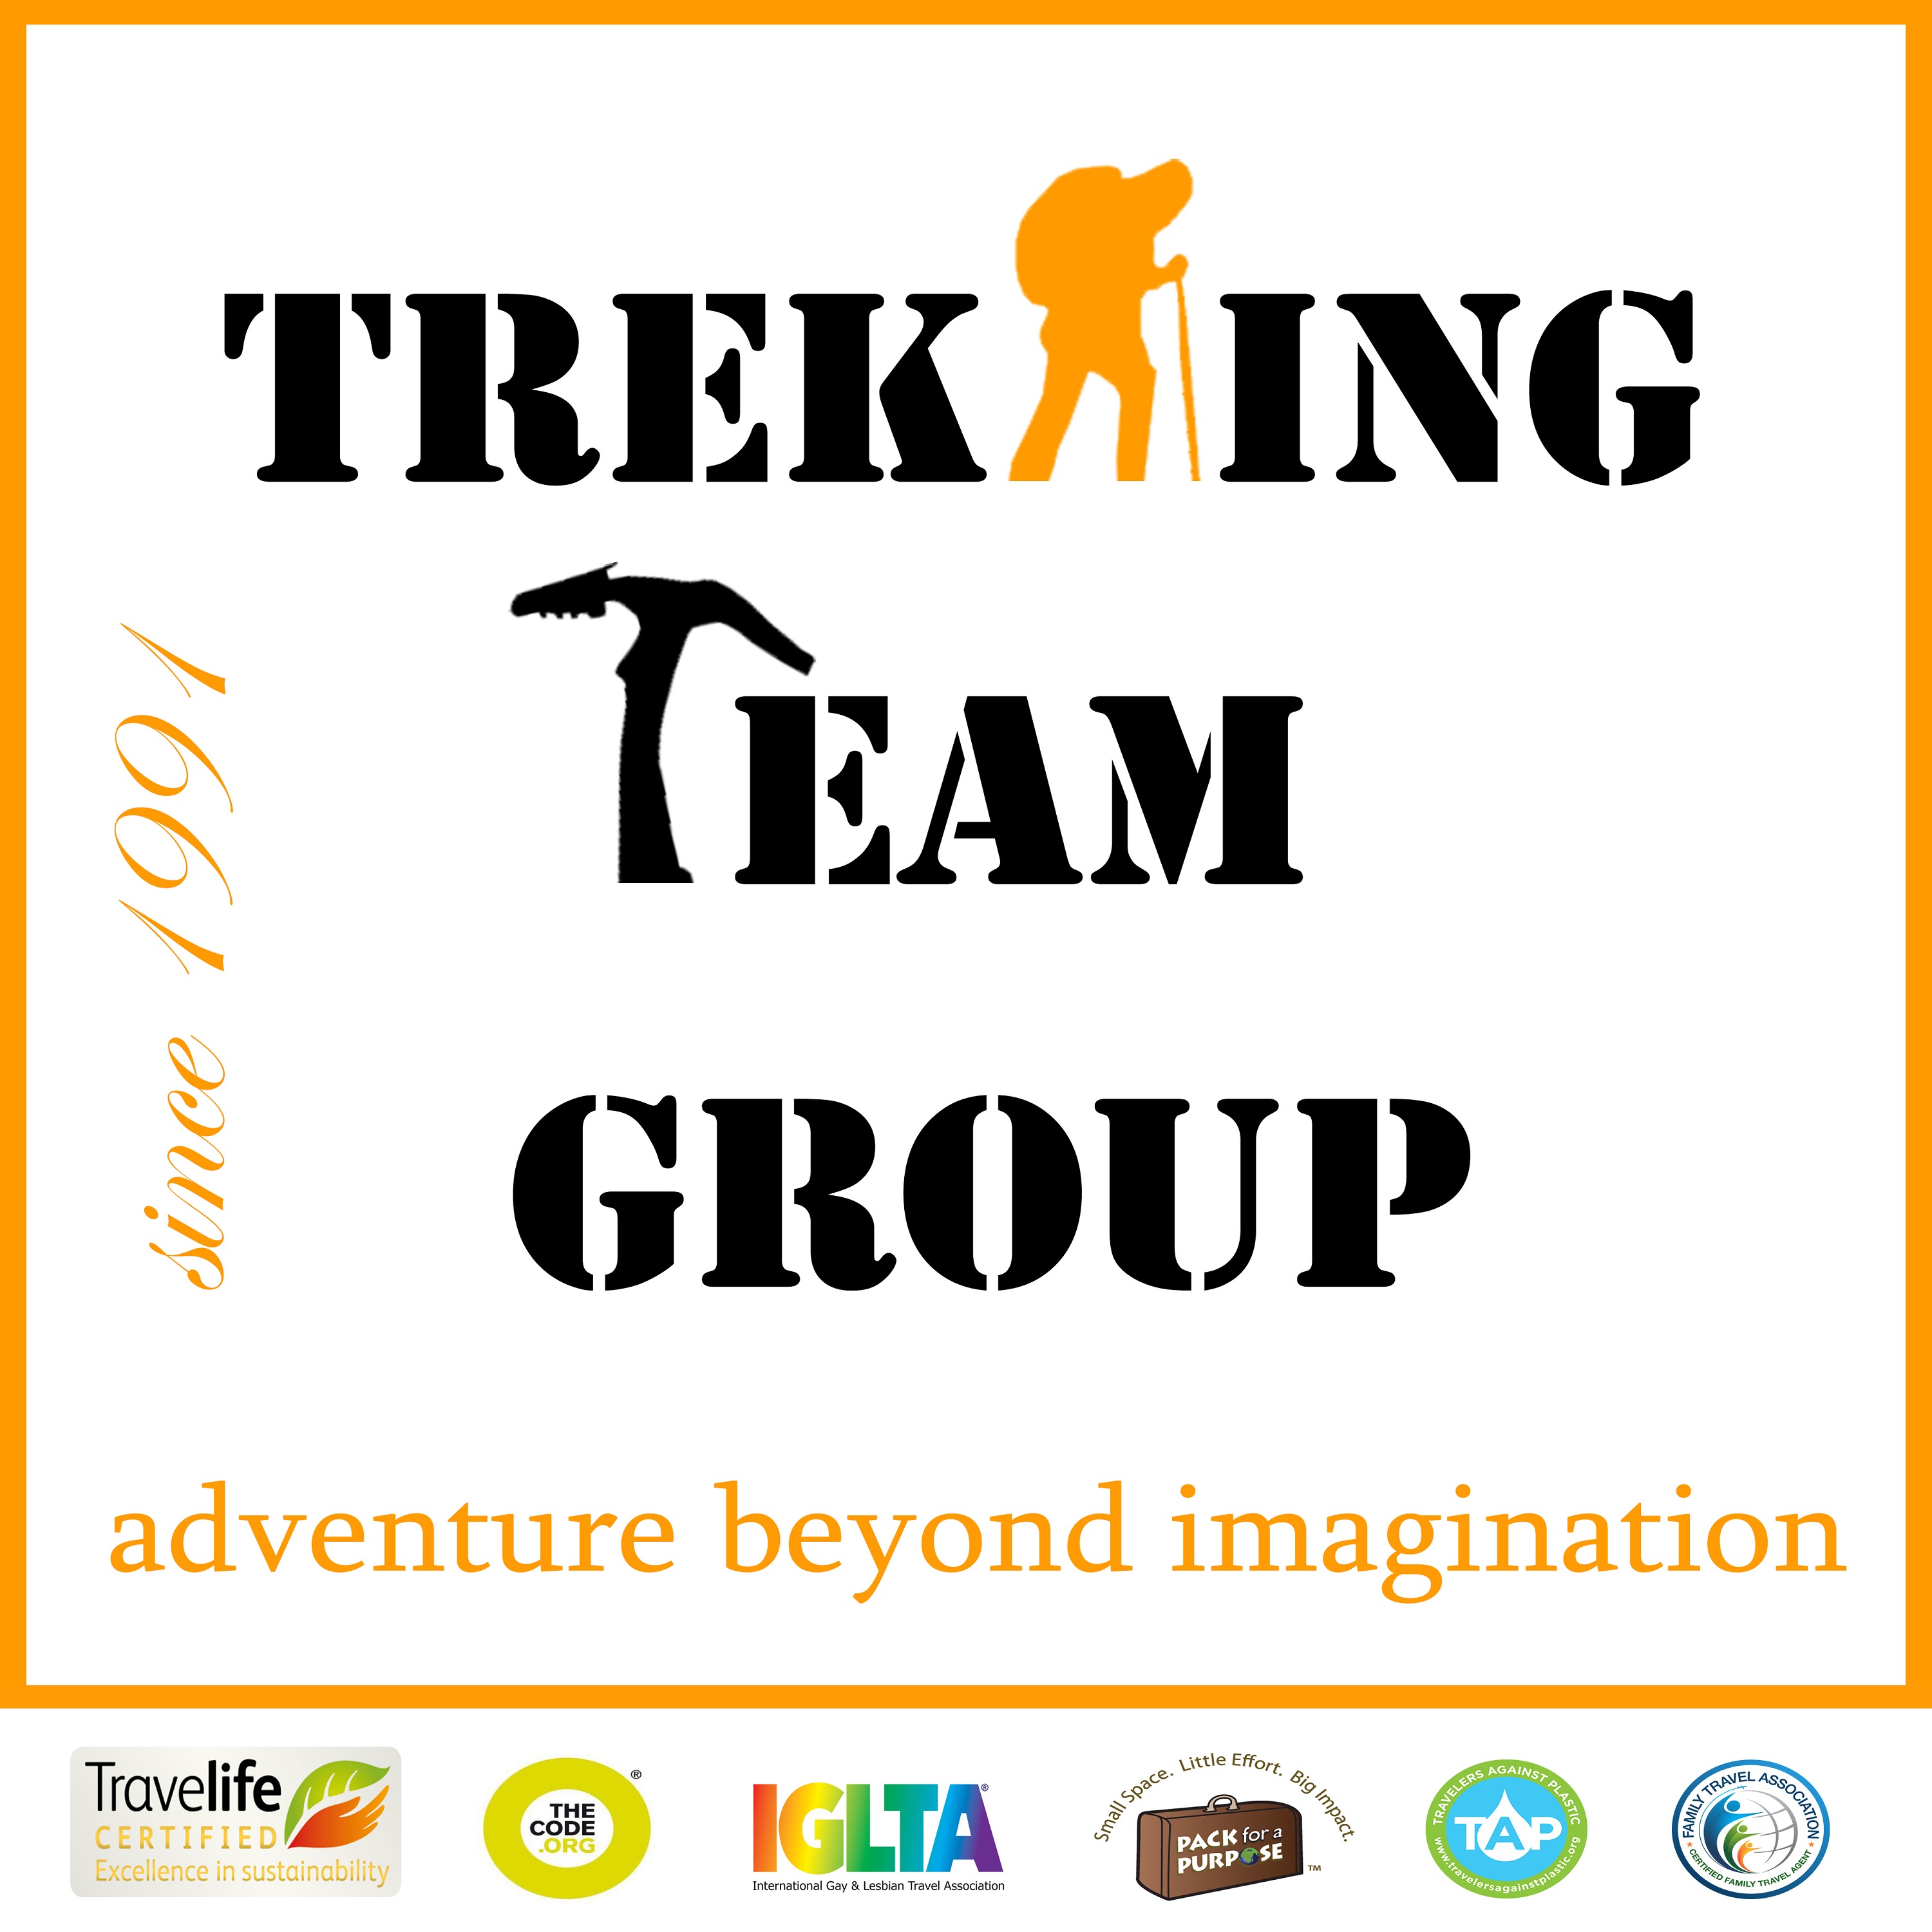 Trekking Team Group